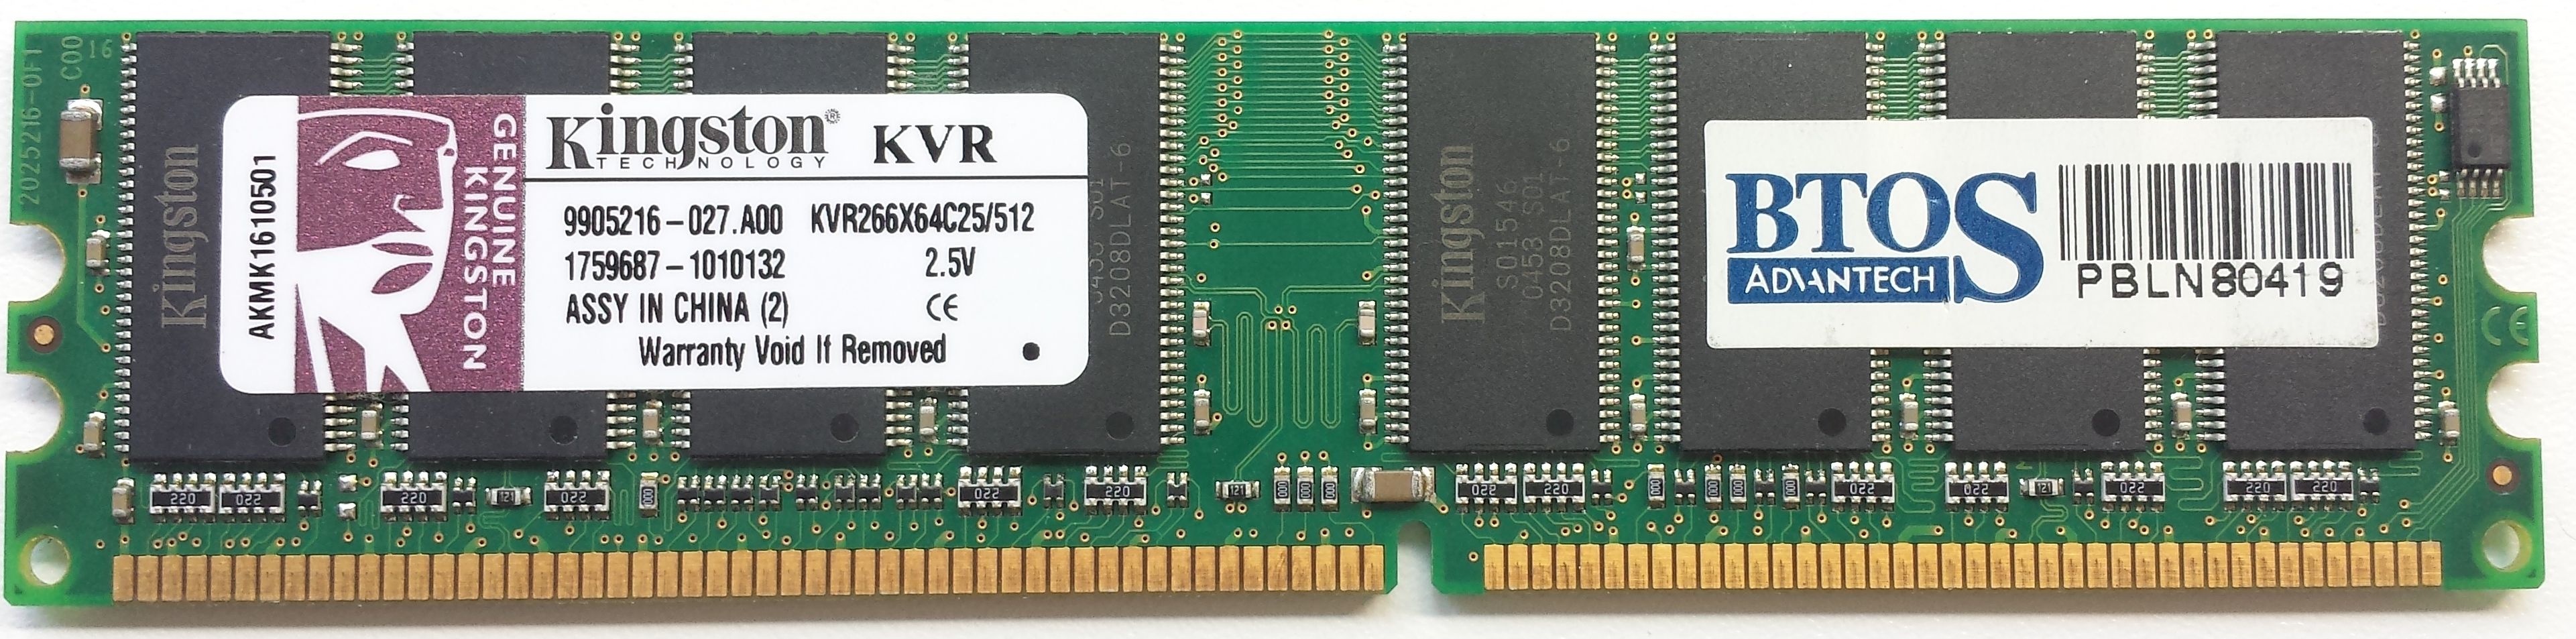 DDR 512MB 266Mhz-PC2100 / Kingston KVR266X64C25/512